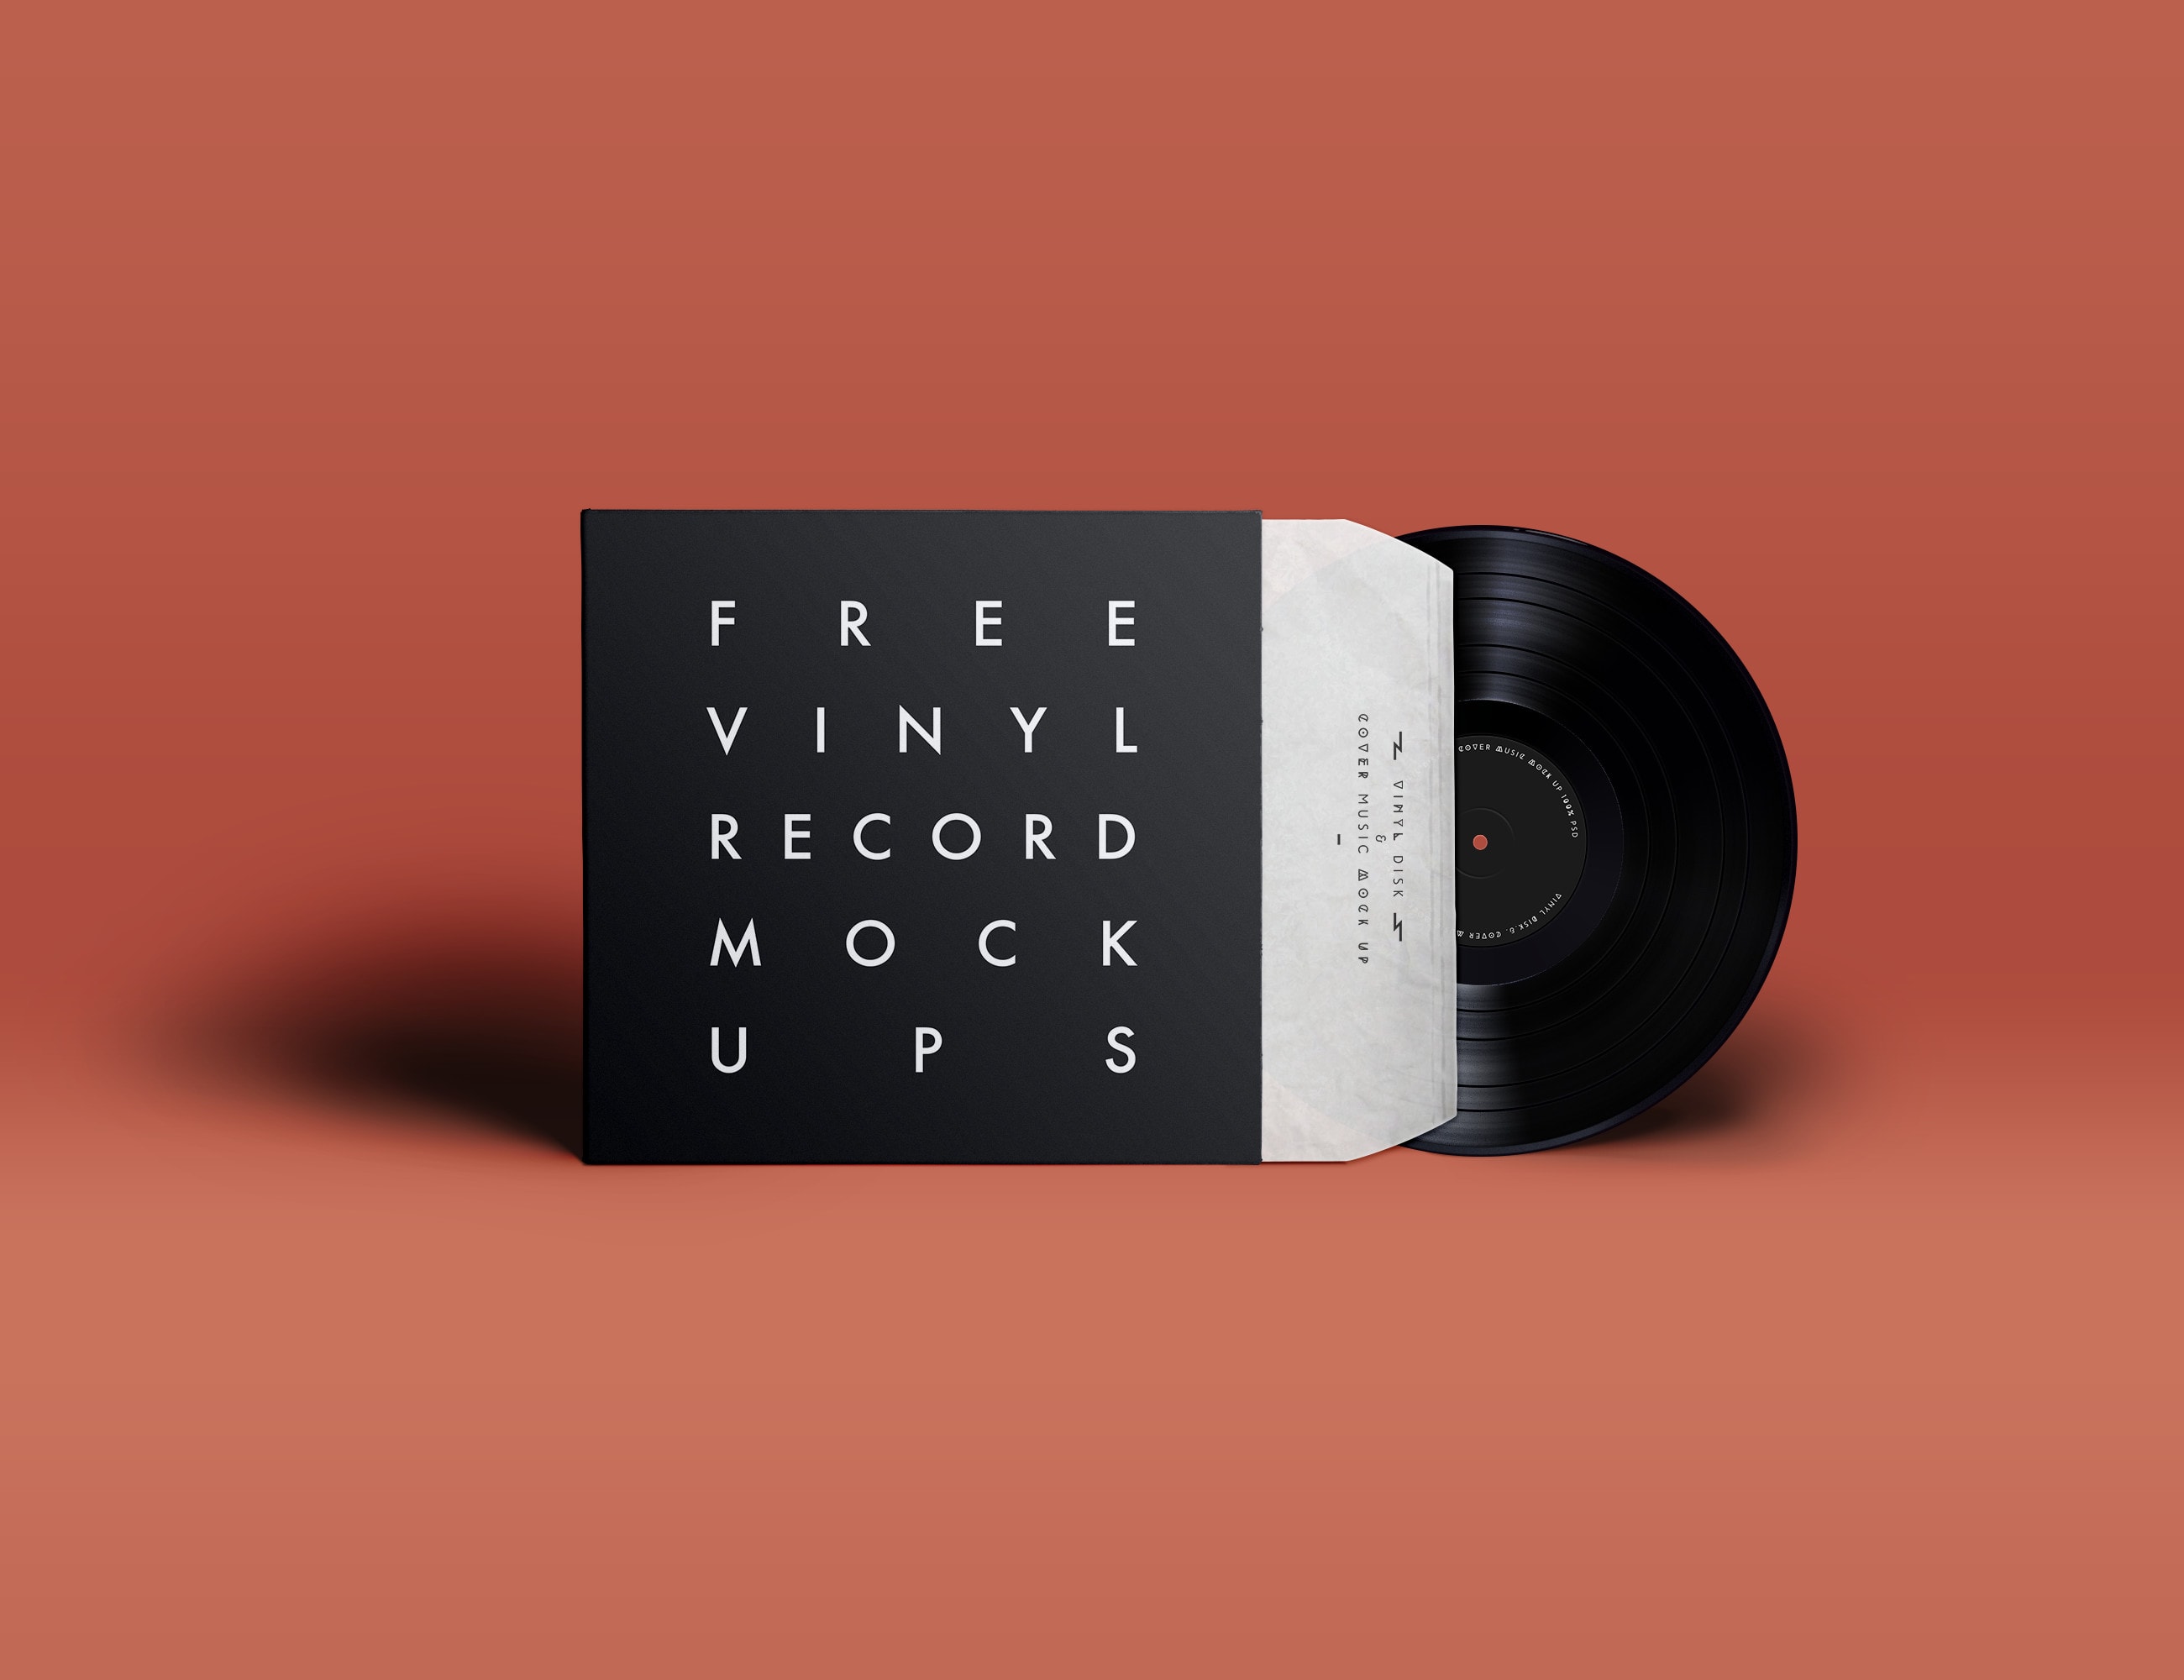 Vinyl record mockup generator free